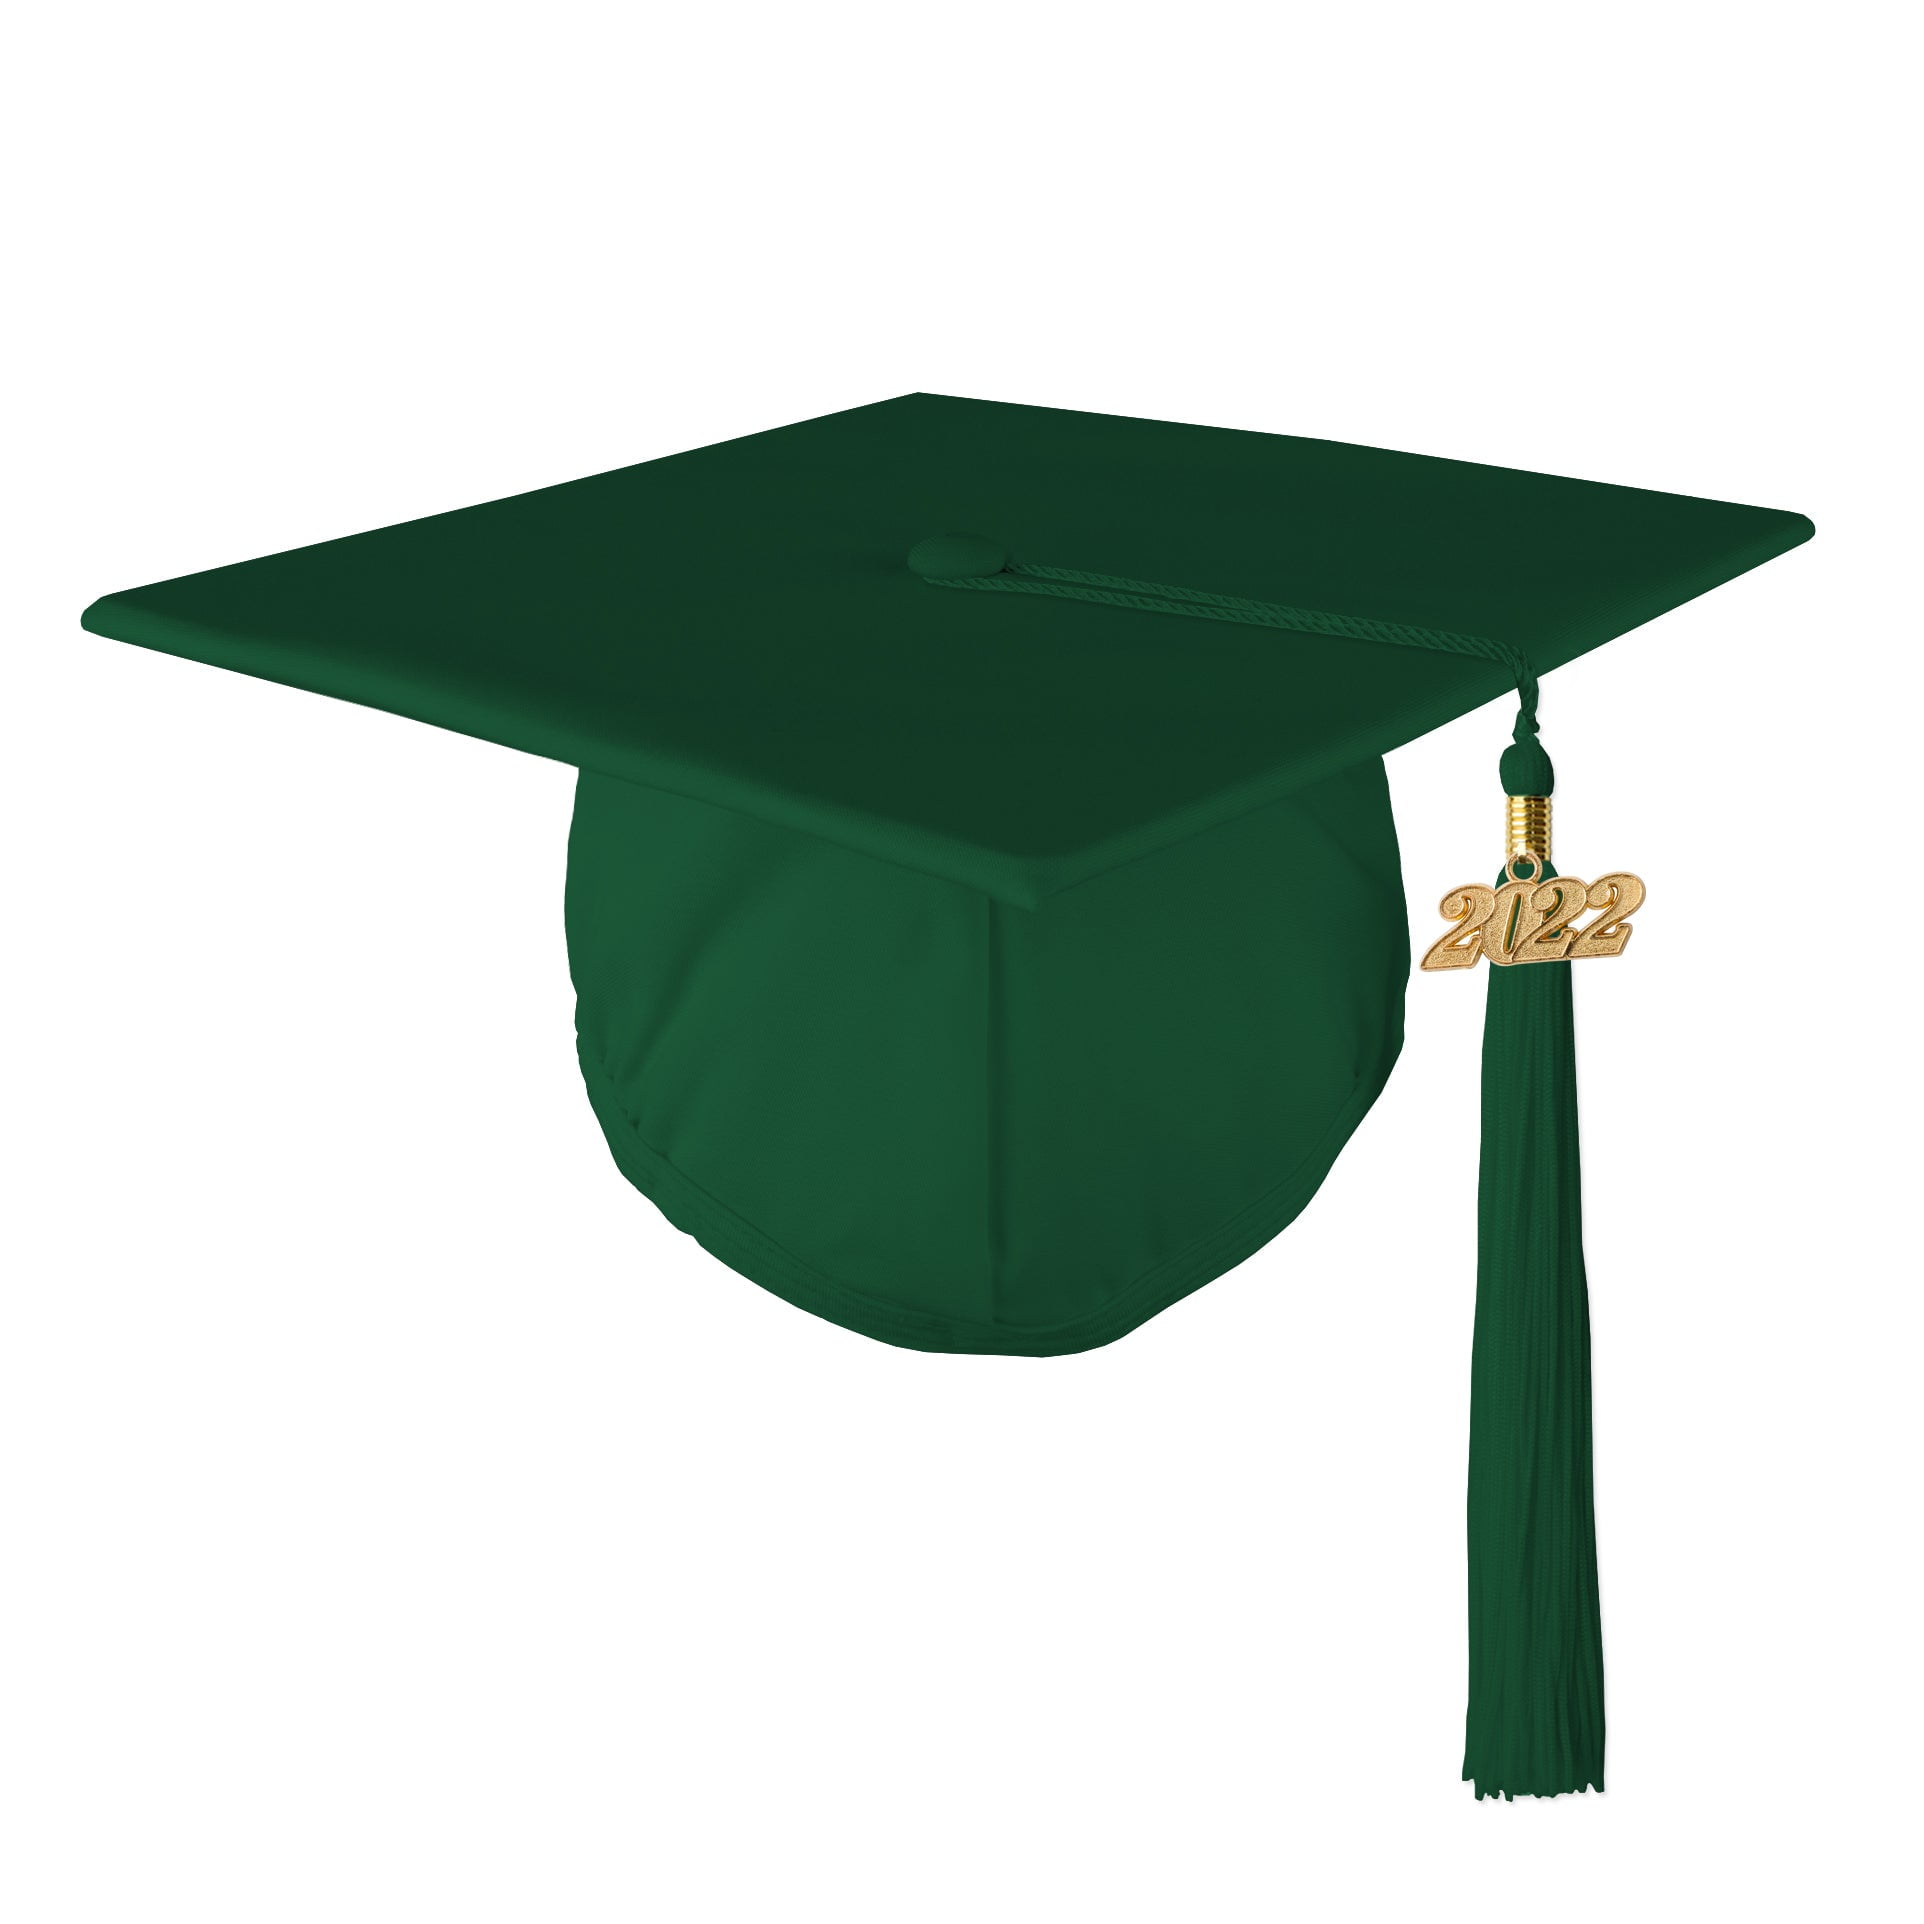 Class Act Graduation Adult Large Graduation Cap & Gown W/ Matching 2019 Tassel 